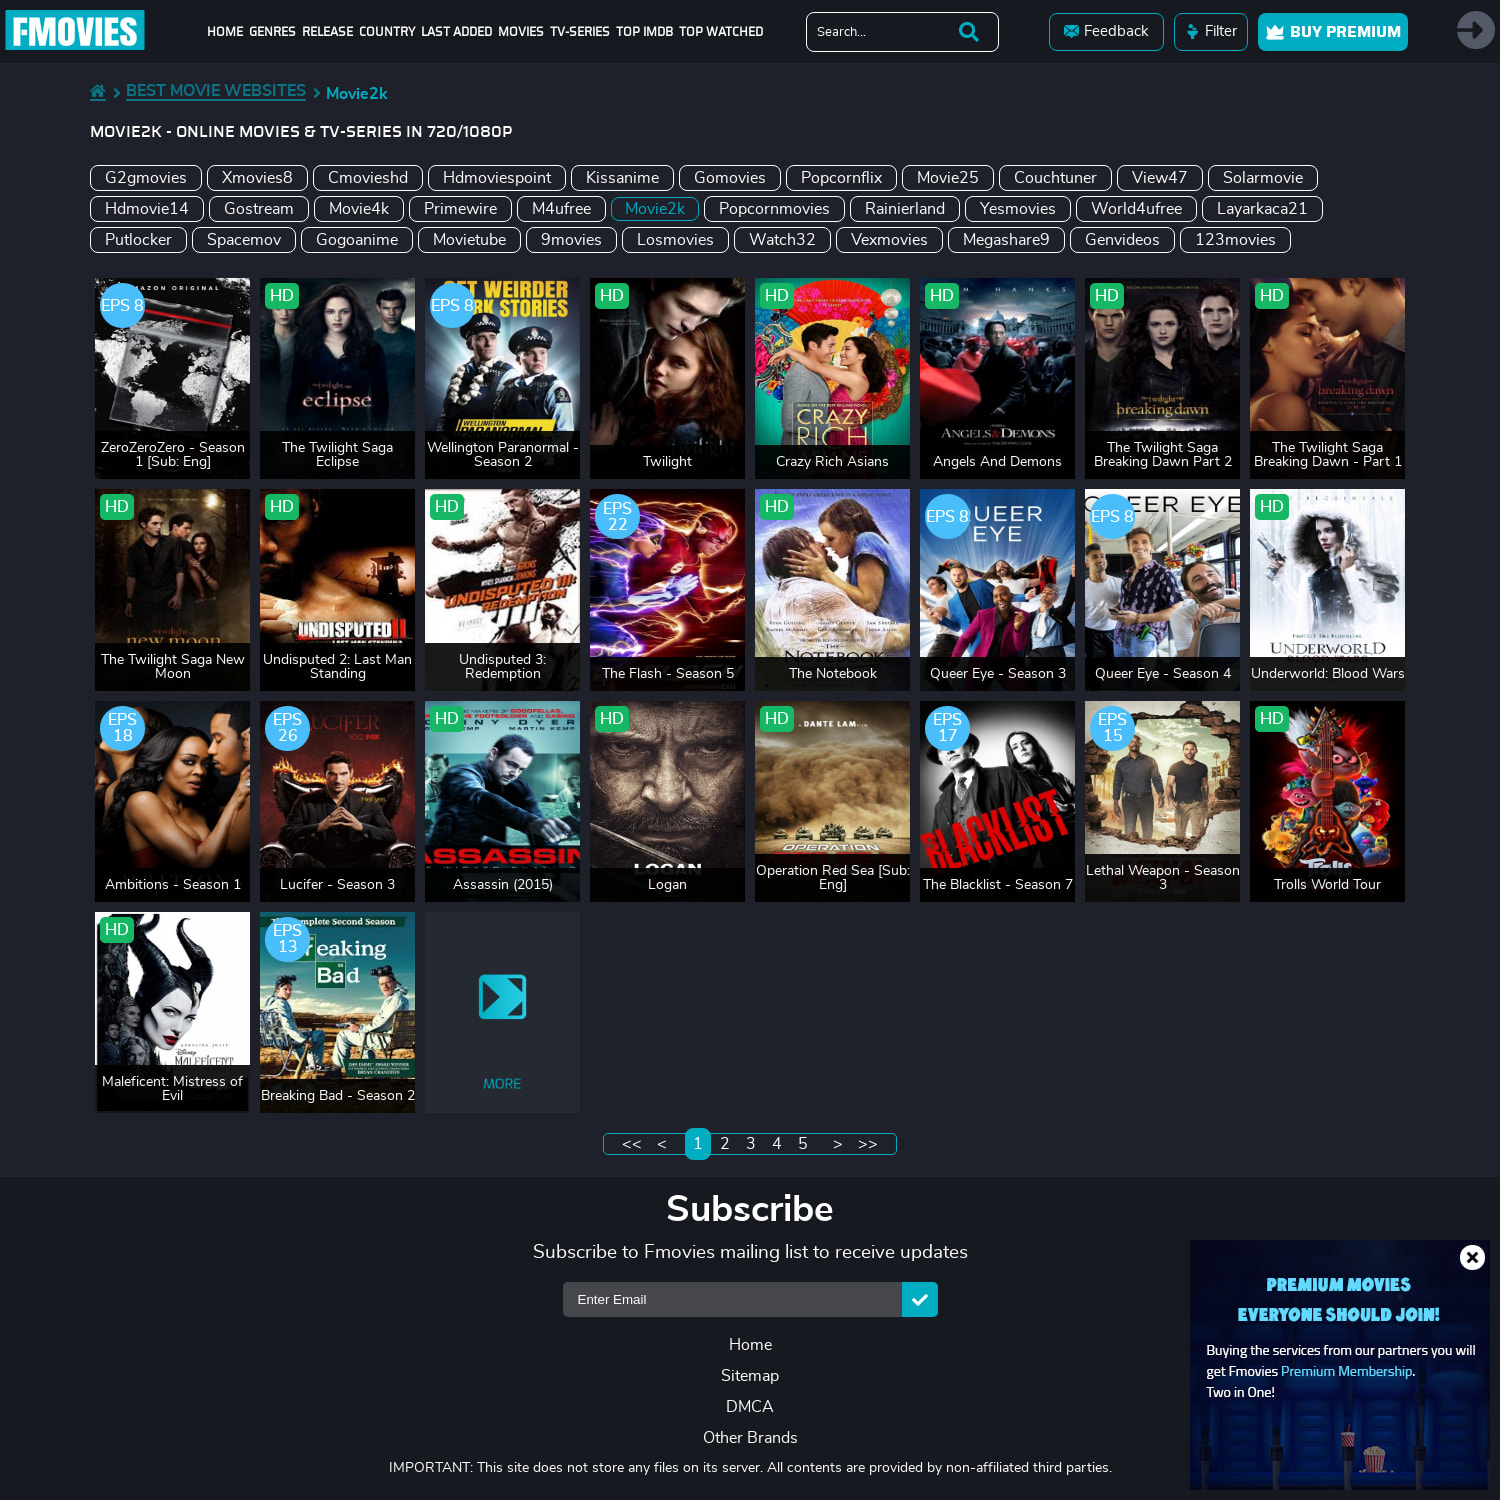 mix-movie2k-free-movies-online-on-fmovies